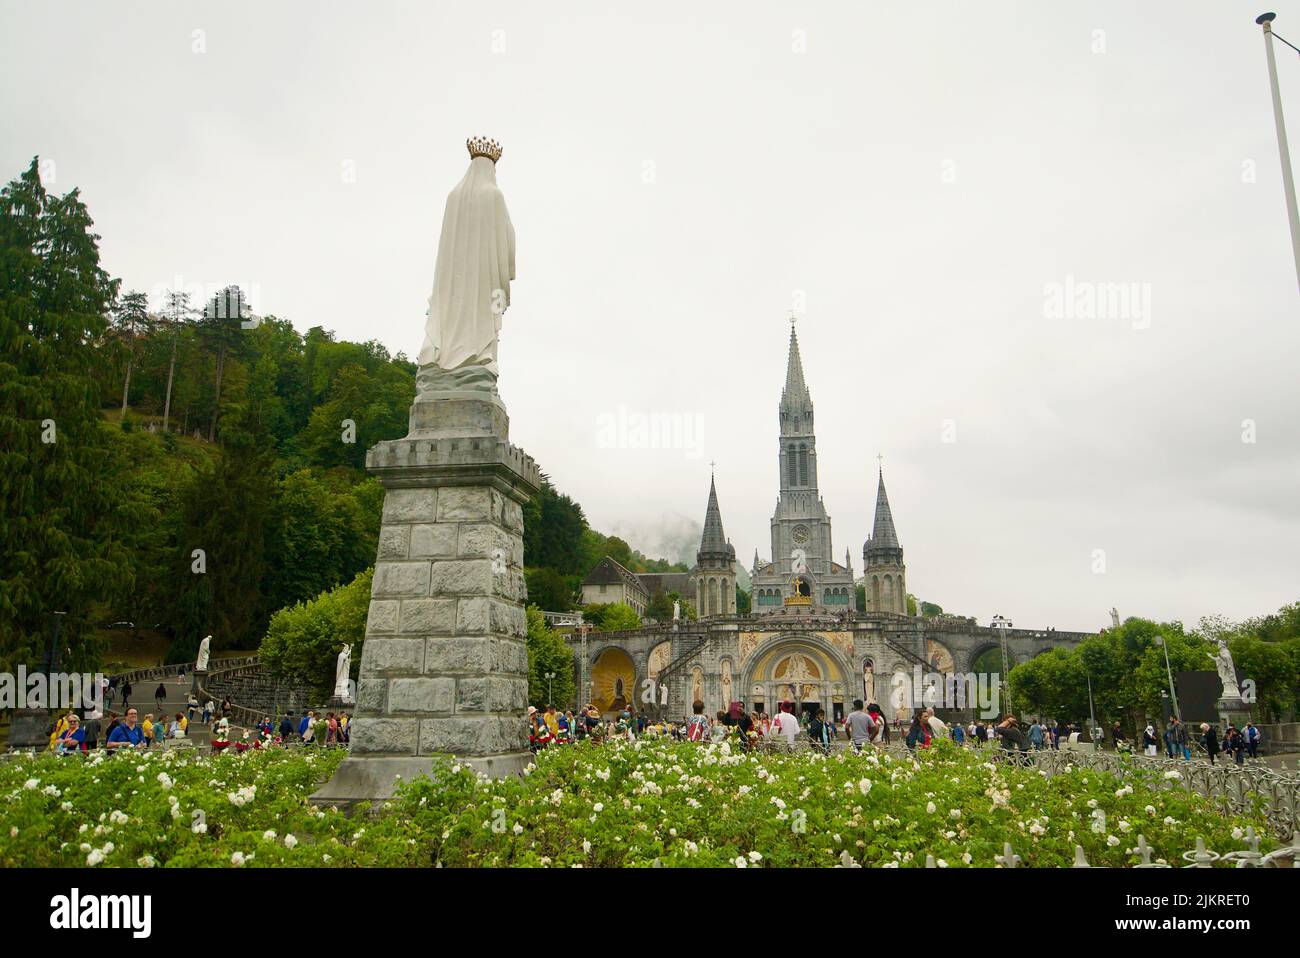 Sanctuaires Notre-Dame de Lourdes, a Catholic pilgrimage site in the South of France. The Sanctuary of Our Lady of Lourdes. Church. Cathedral. Shrine. Stock Photo